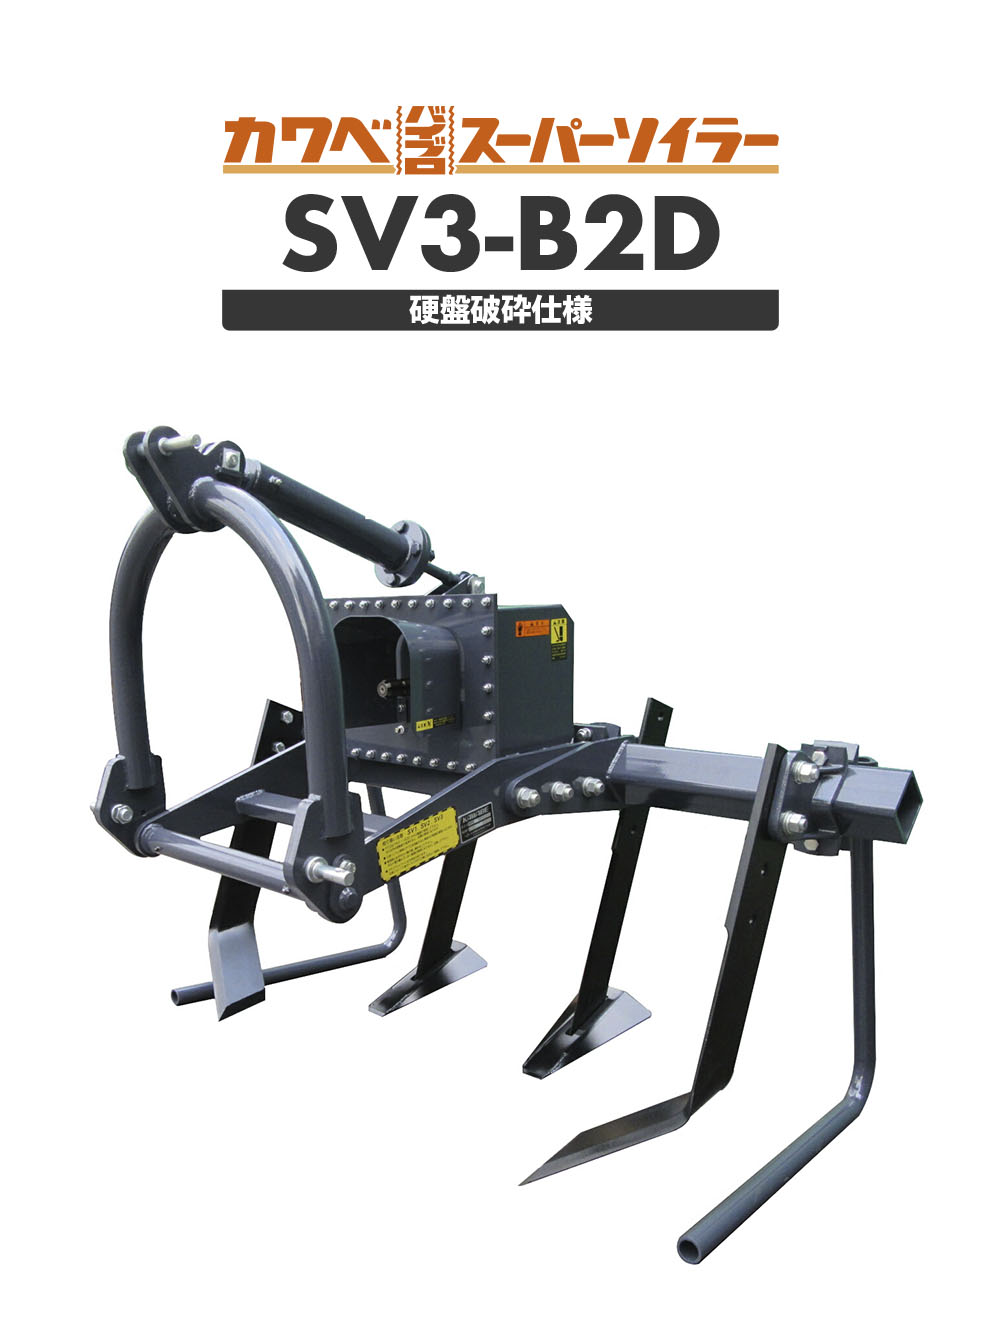 SV3-B2D［硬盤破砕仕様］